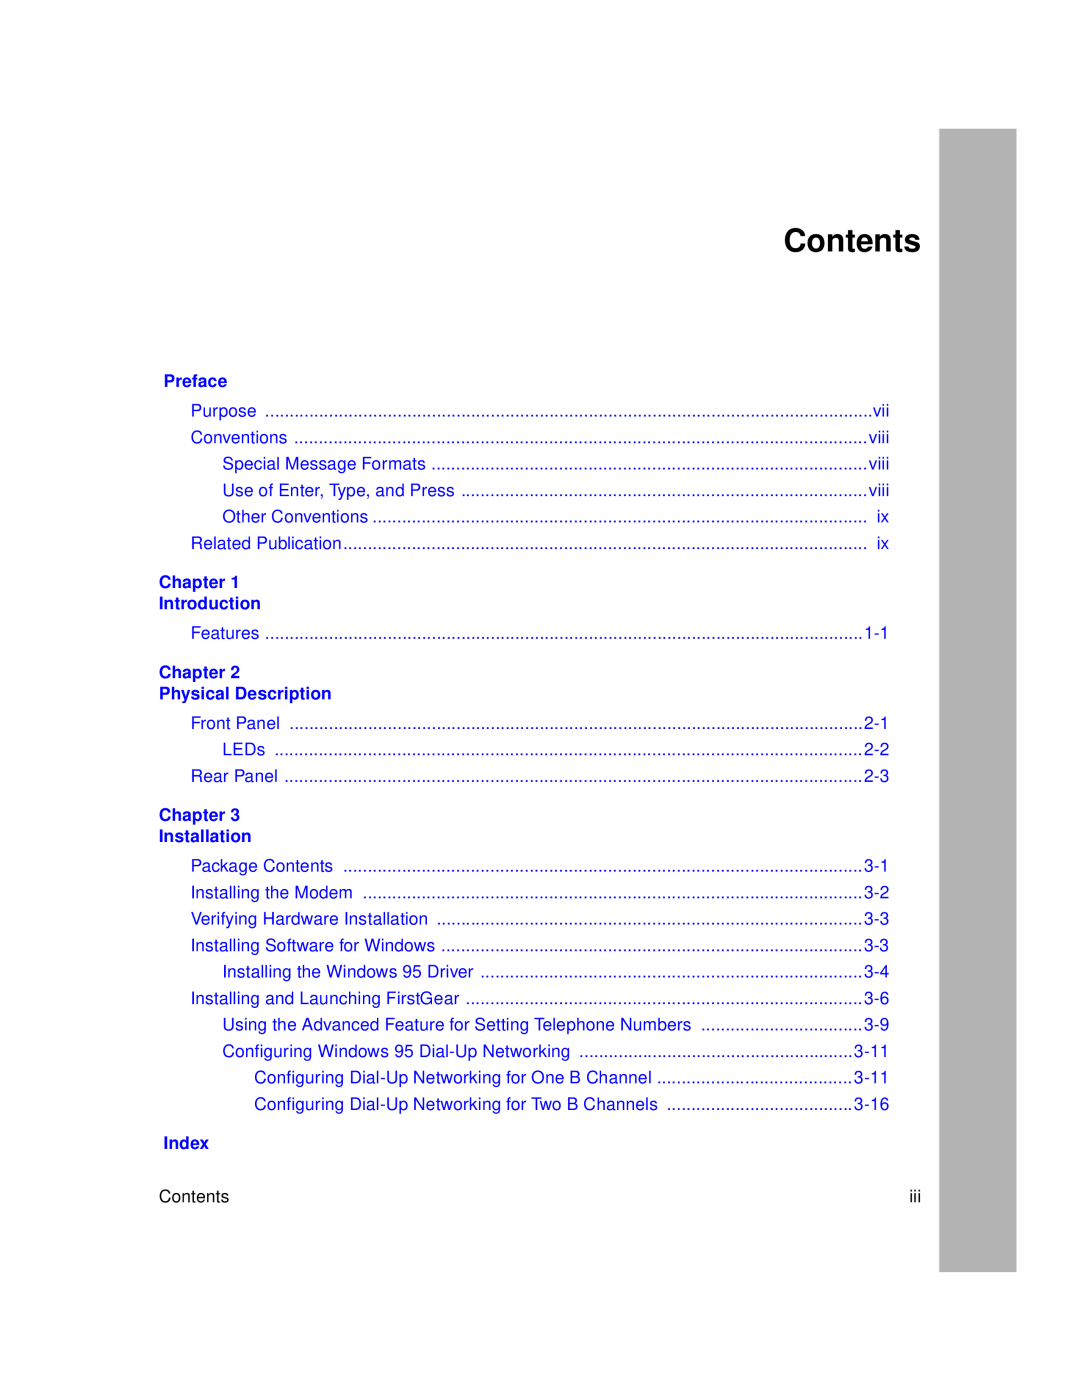 NETGEAR XM128S manual Contents, Preface, Chapter, Introduction, Physical Description, Installation, Index 